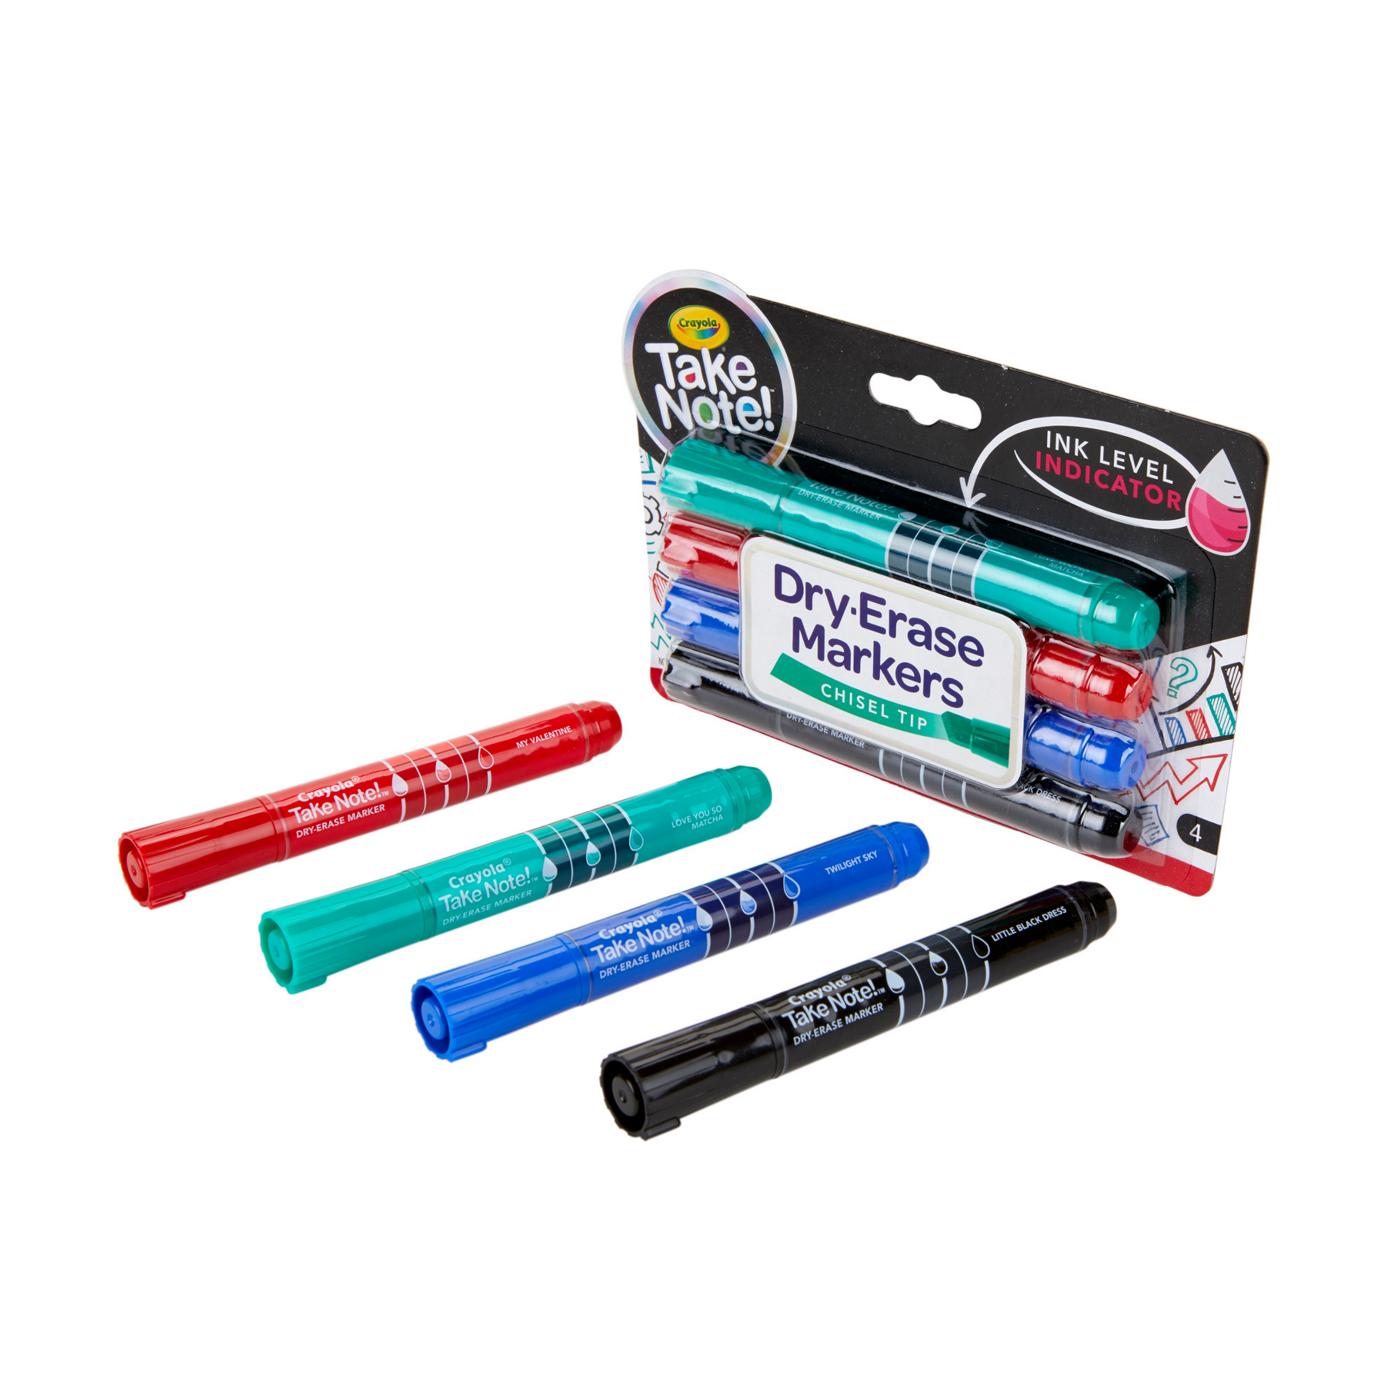 H-E-B Fine Tip Dry Erase Markers - Black - Shop Highlighters & Dry-Erase at  H-E-B